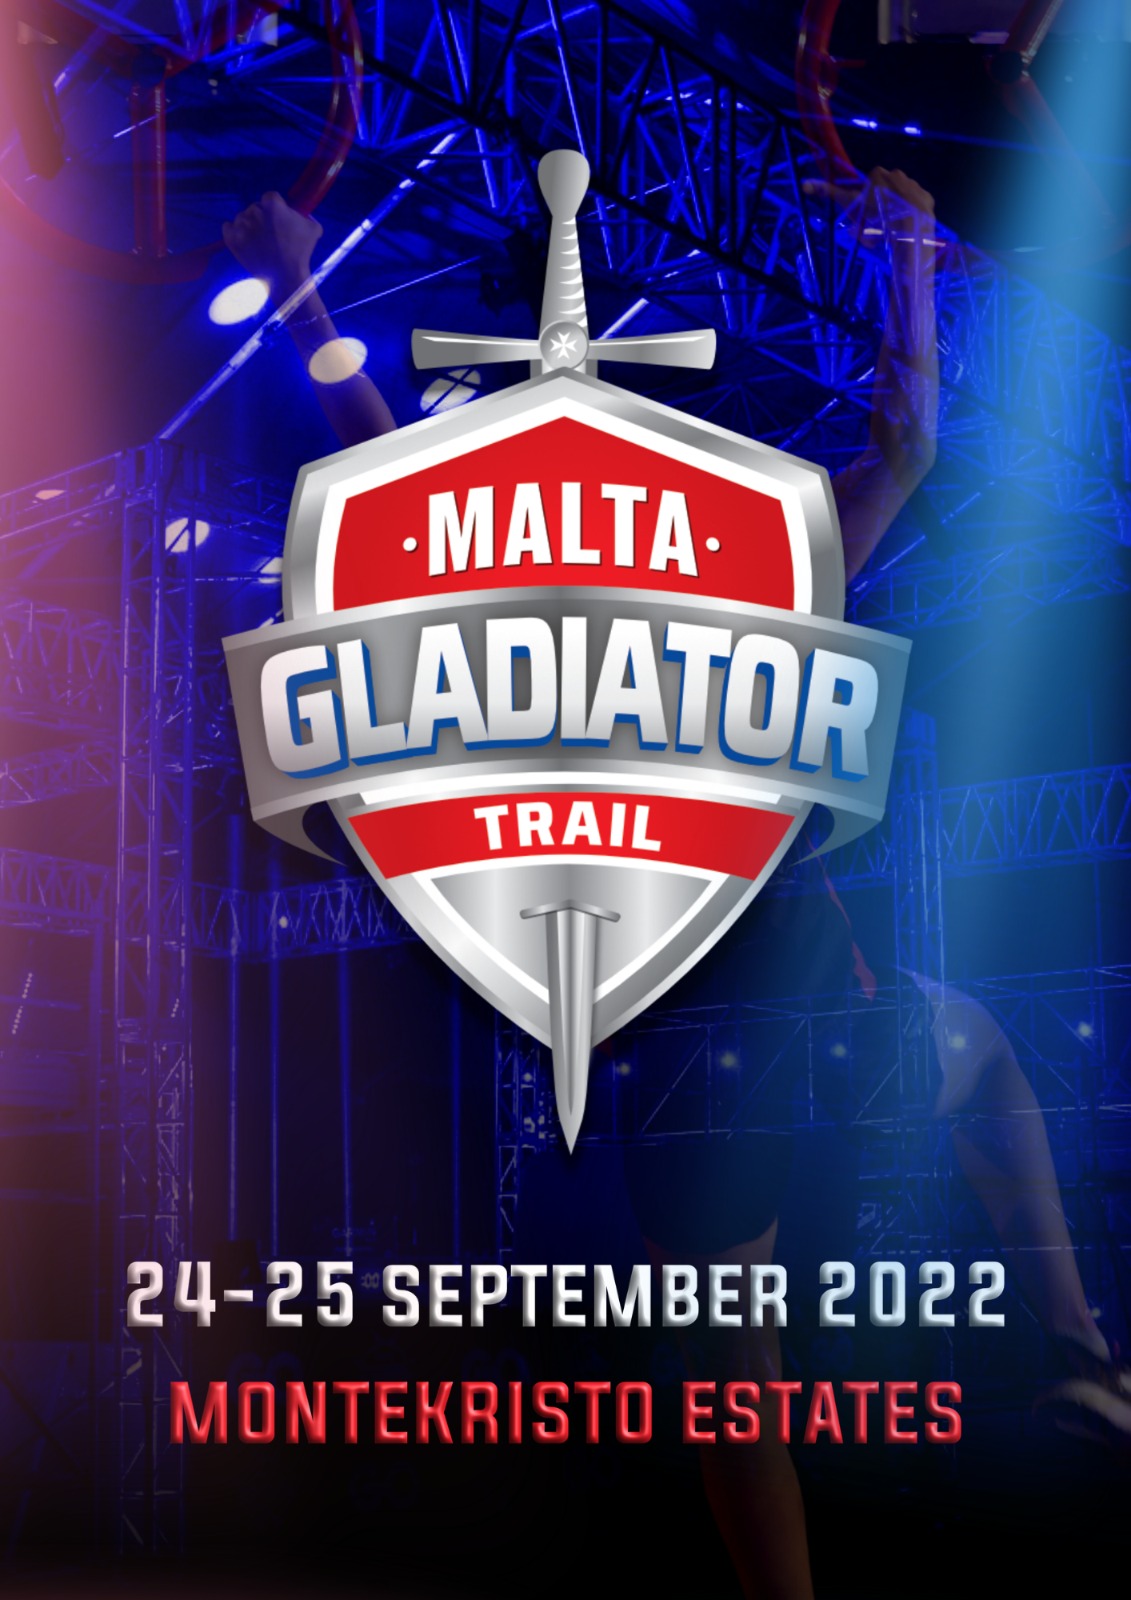 Malta Gladiator Trail 2022 poster